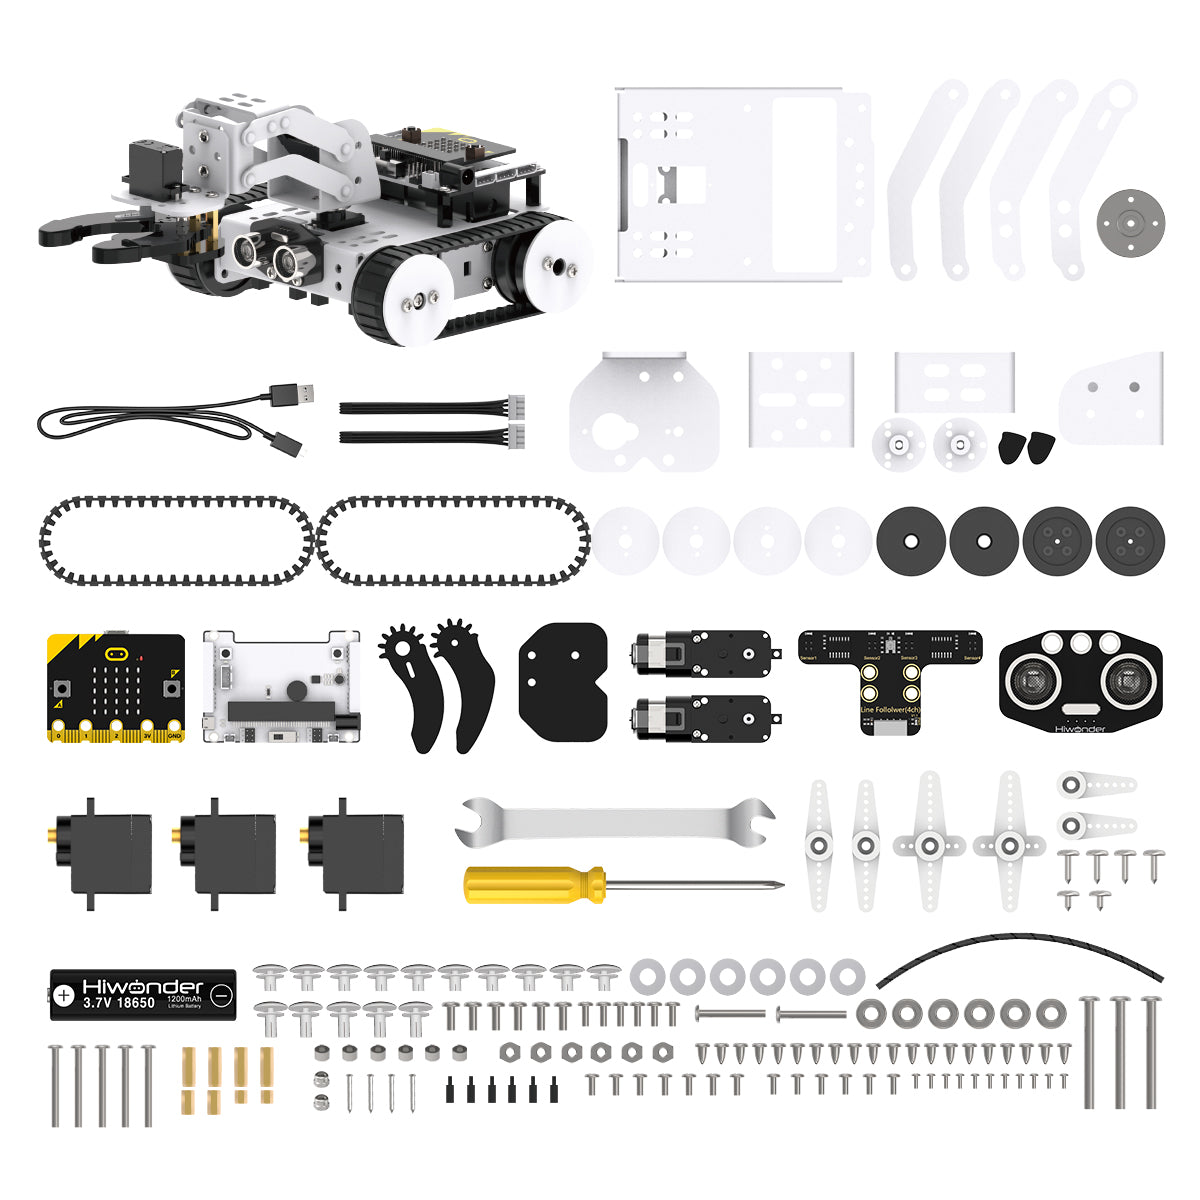 Qtruck Programmable Educational Robot: Hiwonder micro:bit Series Robot with Various Forms